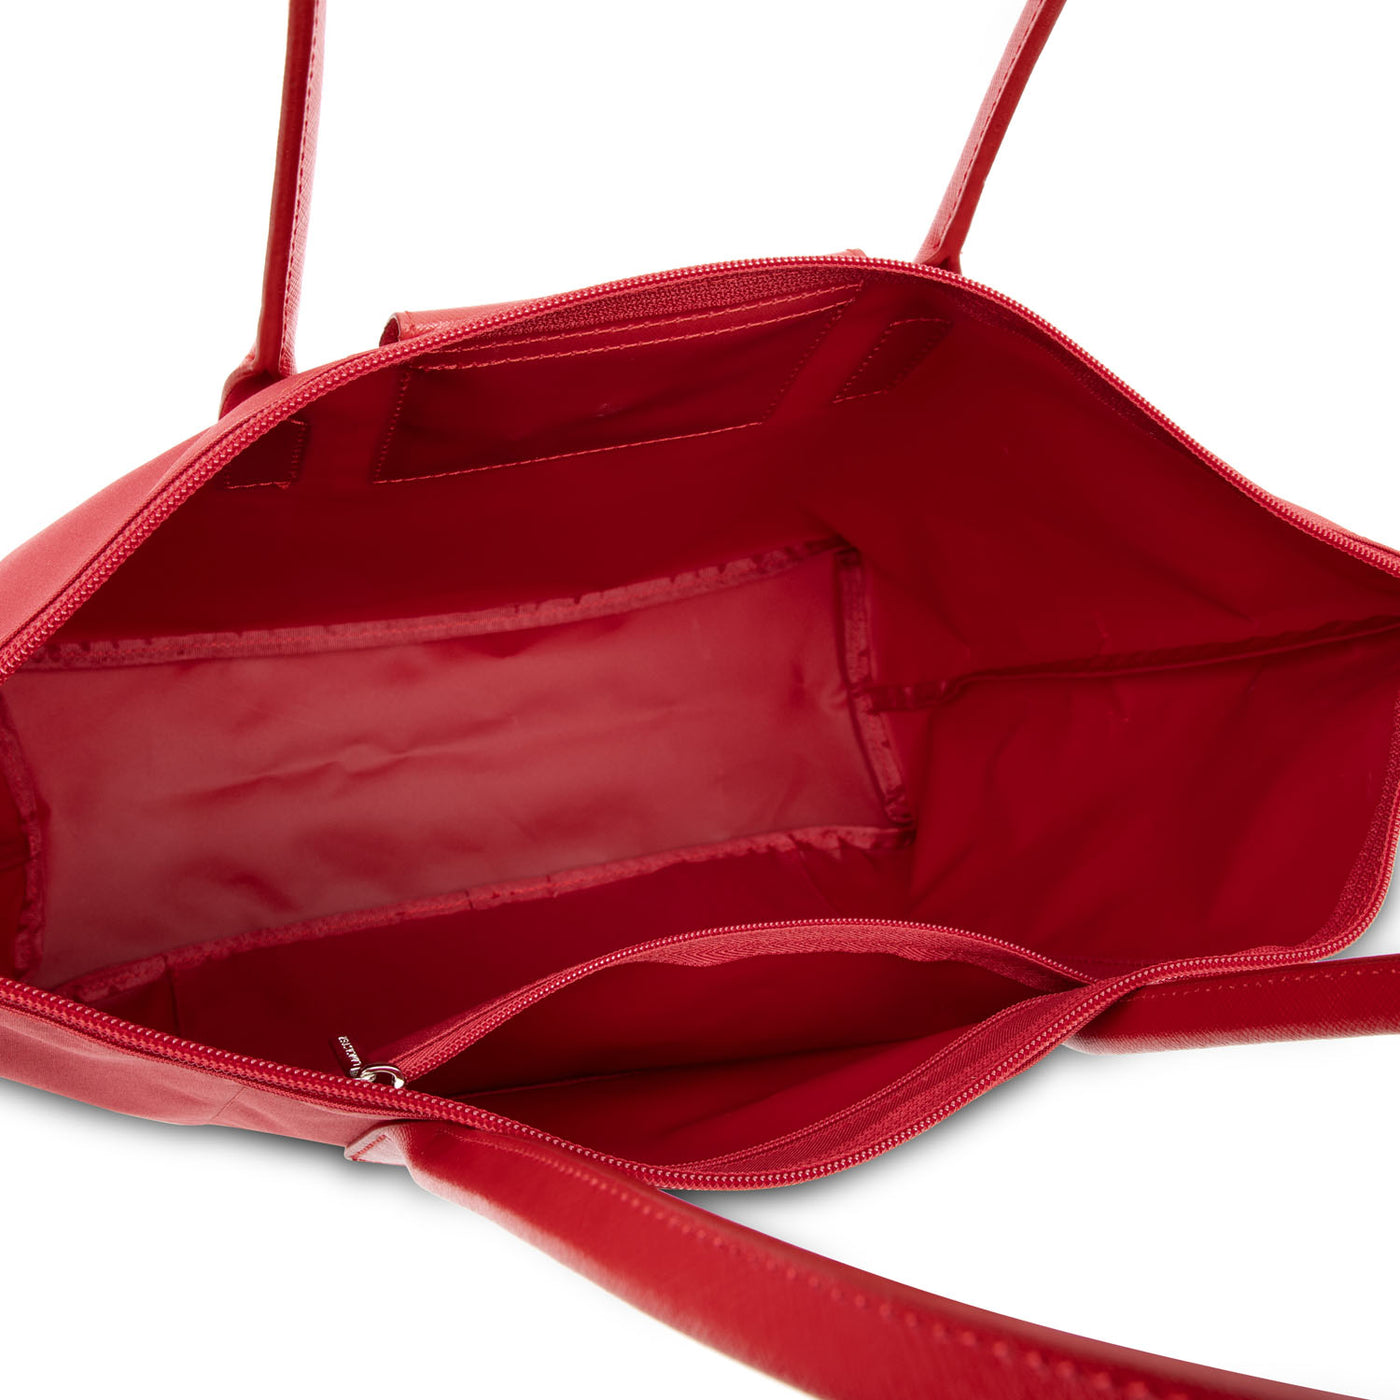 grand sac cabas épaule - smart kba #couleur_rouge